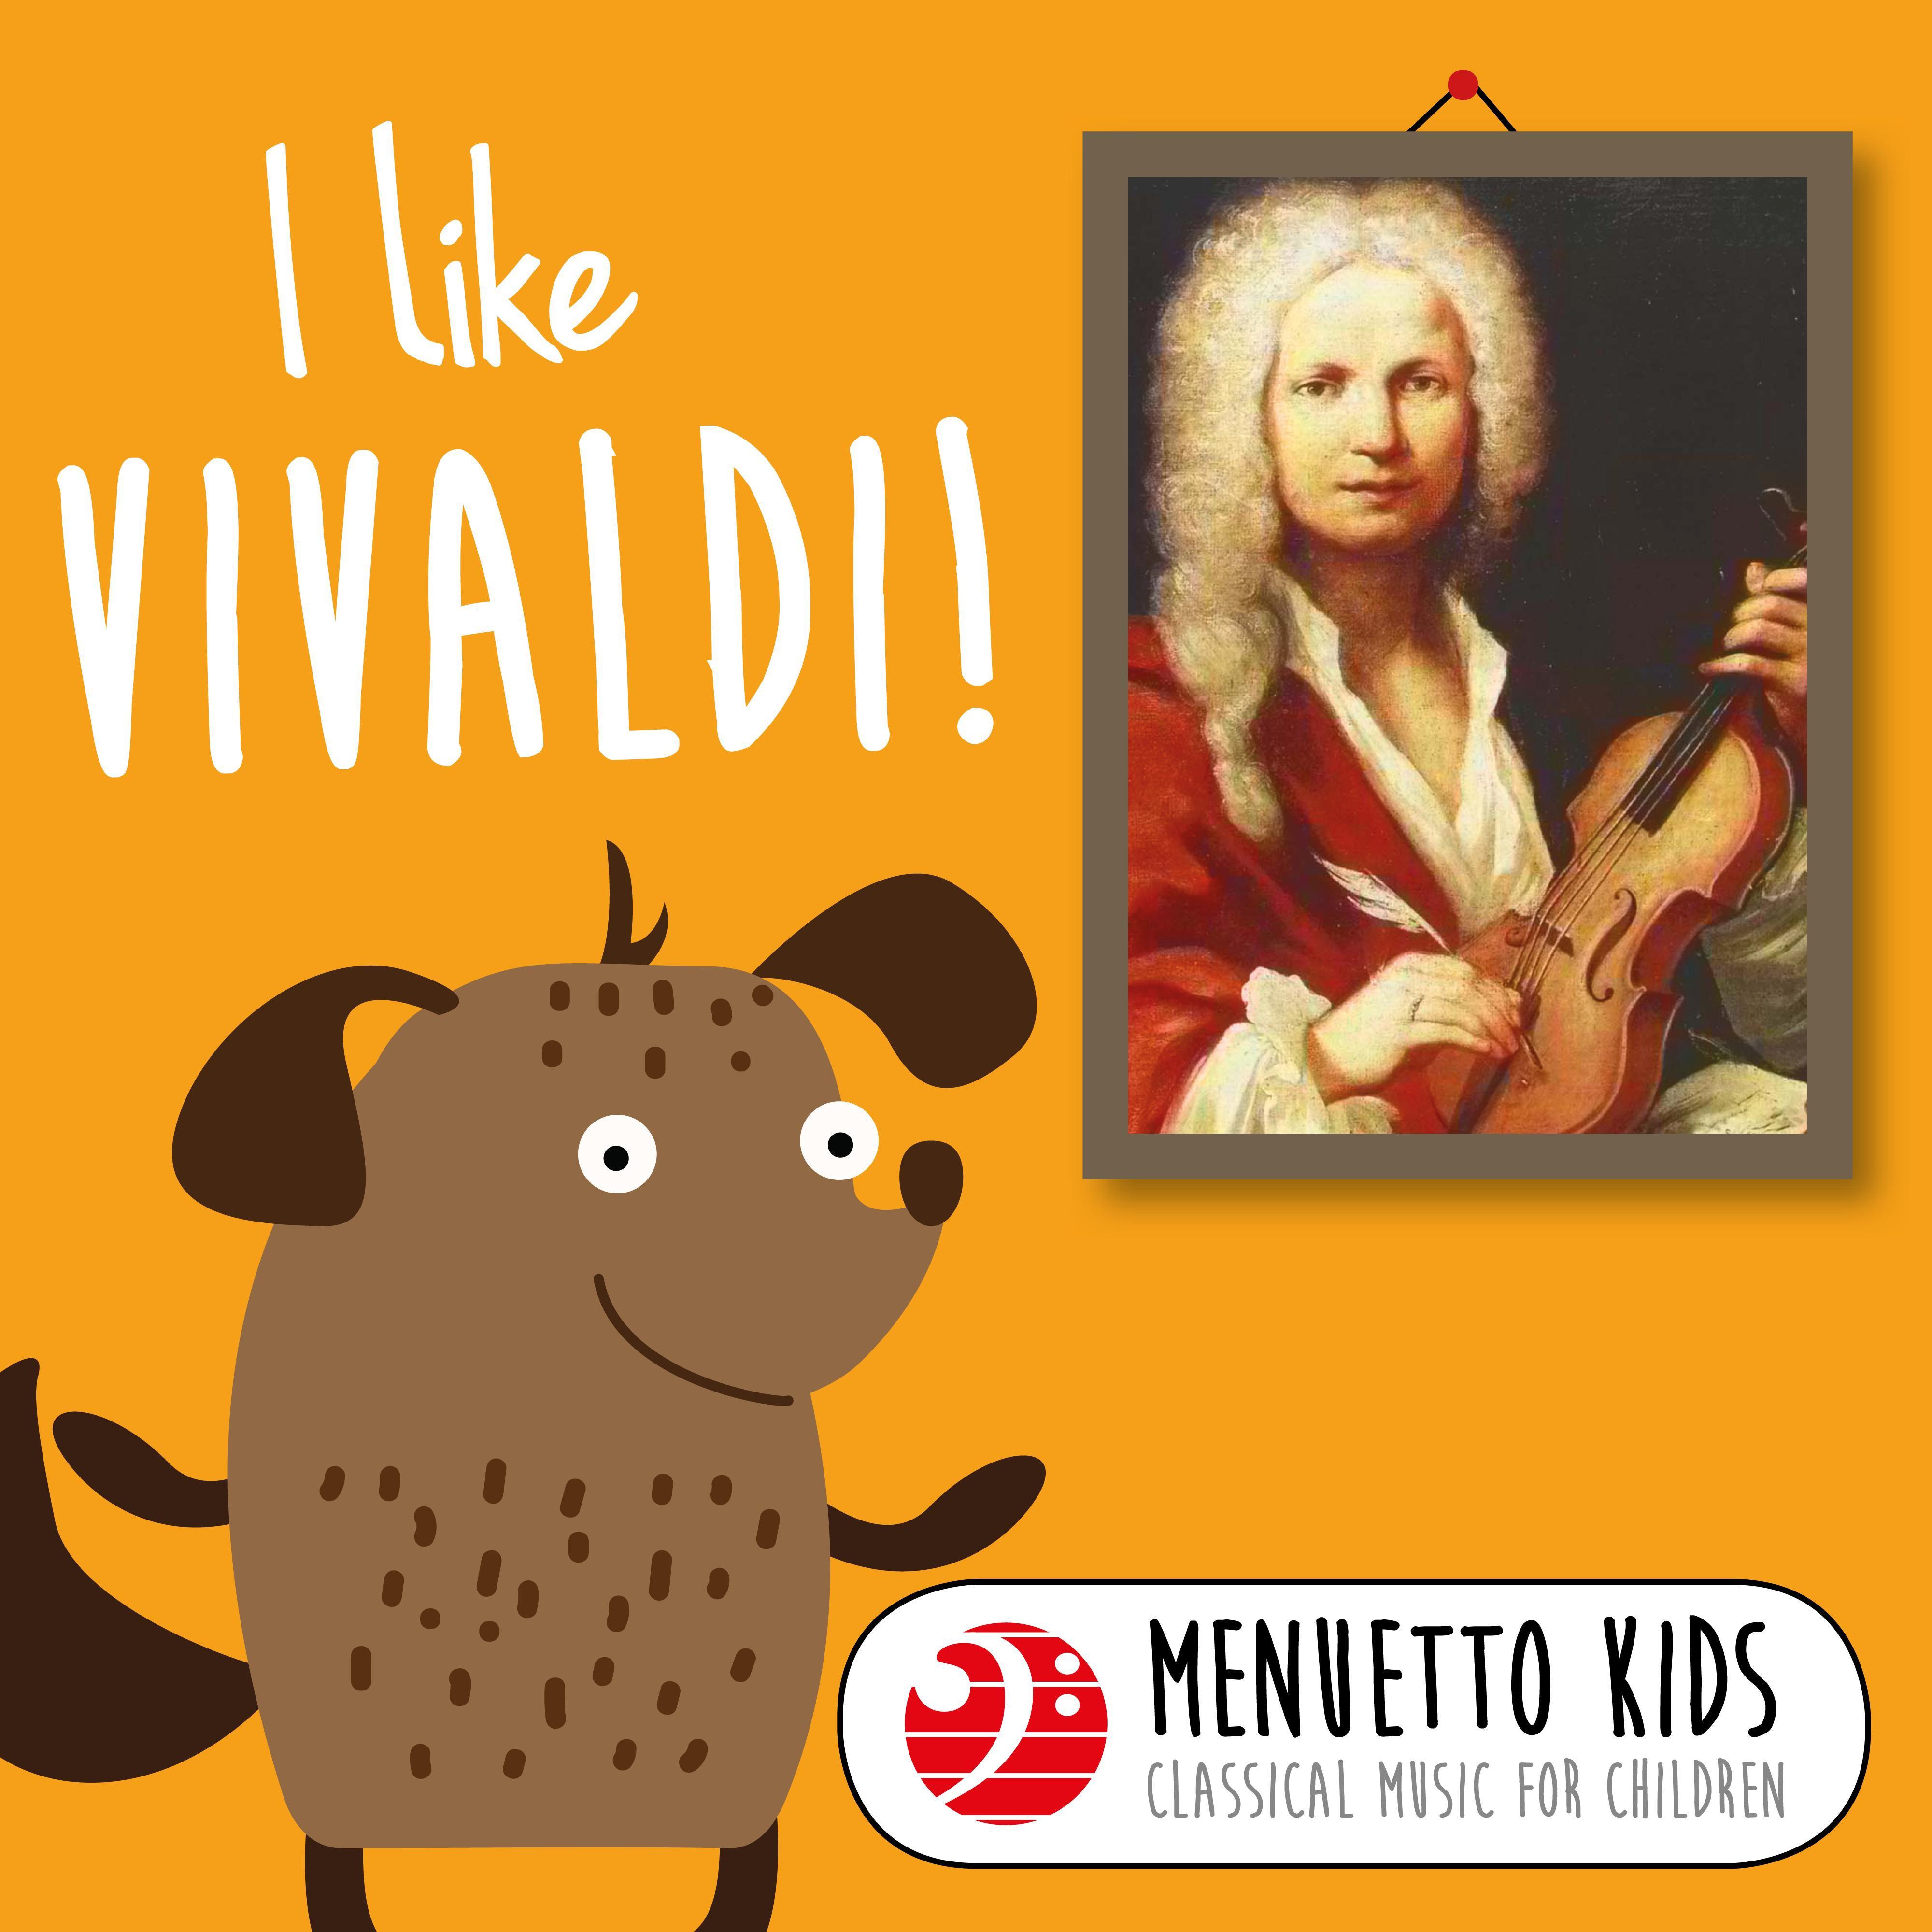 I Like Vivaldi! (Menuetto Kids - Classical Music for Children)